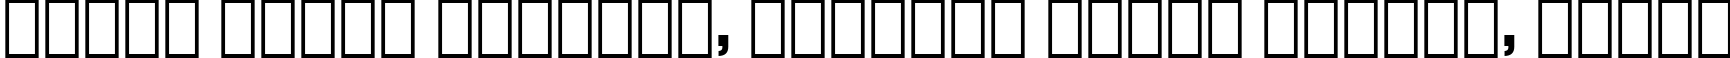 Пример написания шрифтом Square 721 Bold Condensed BT текста на белорусском